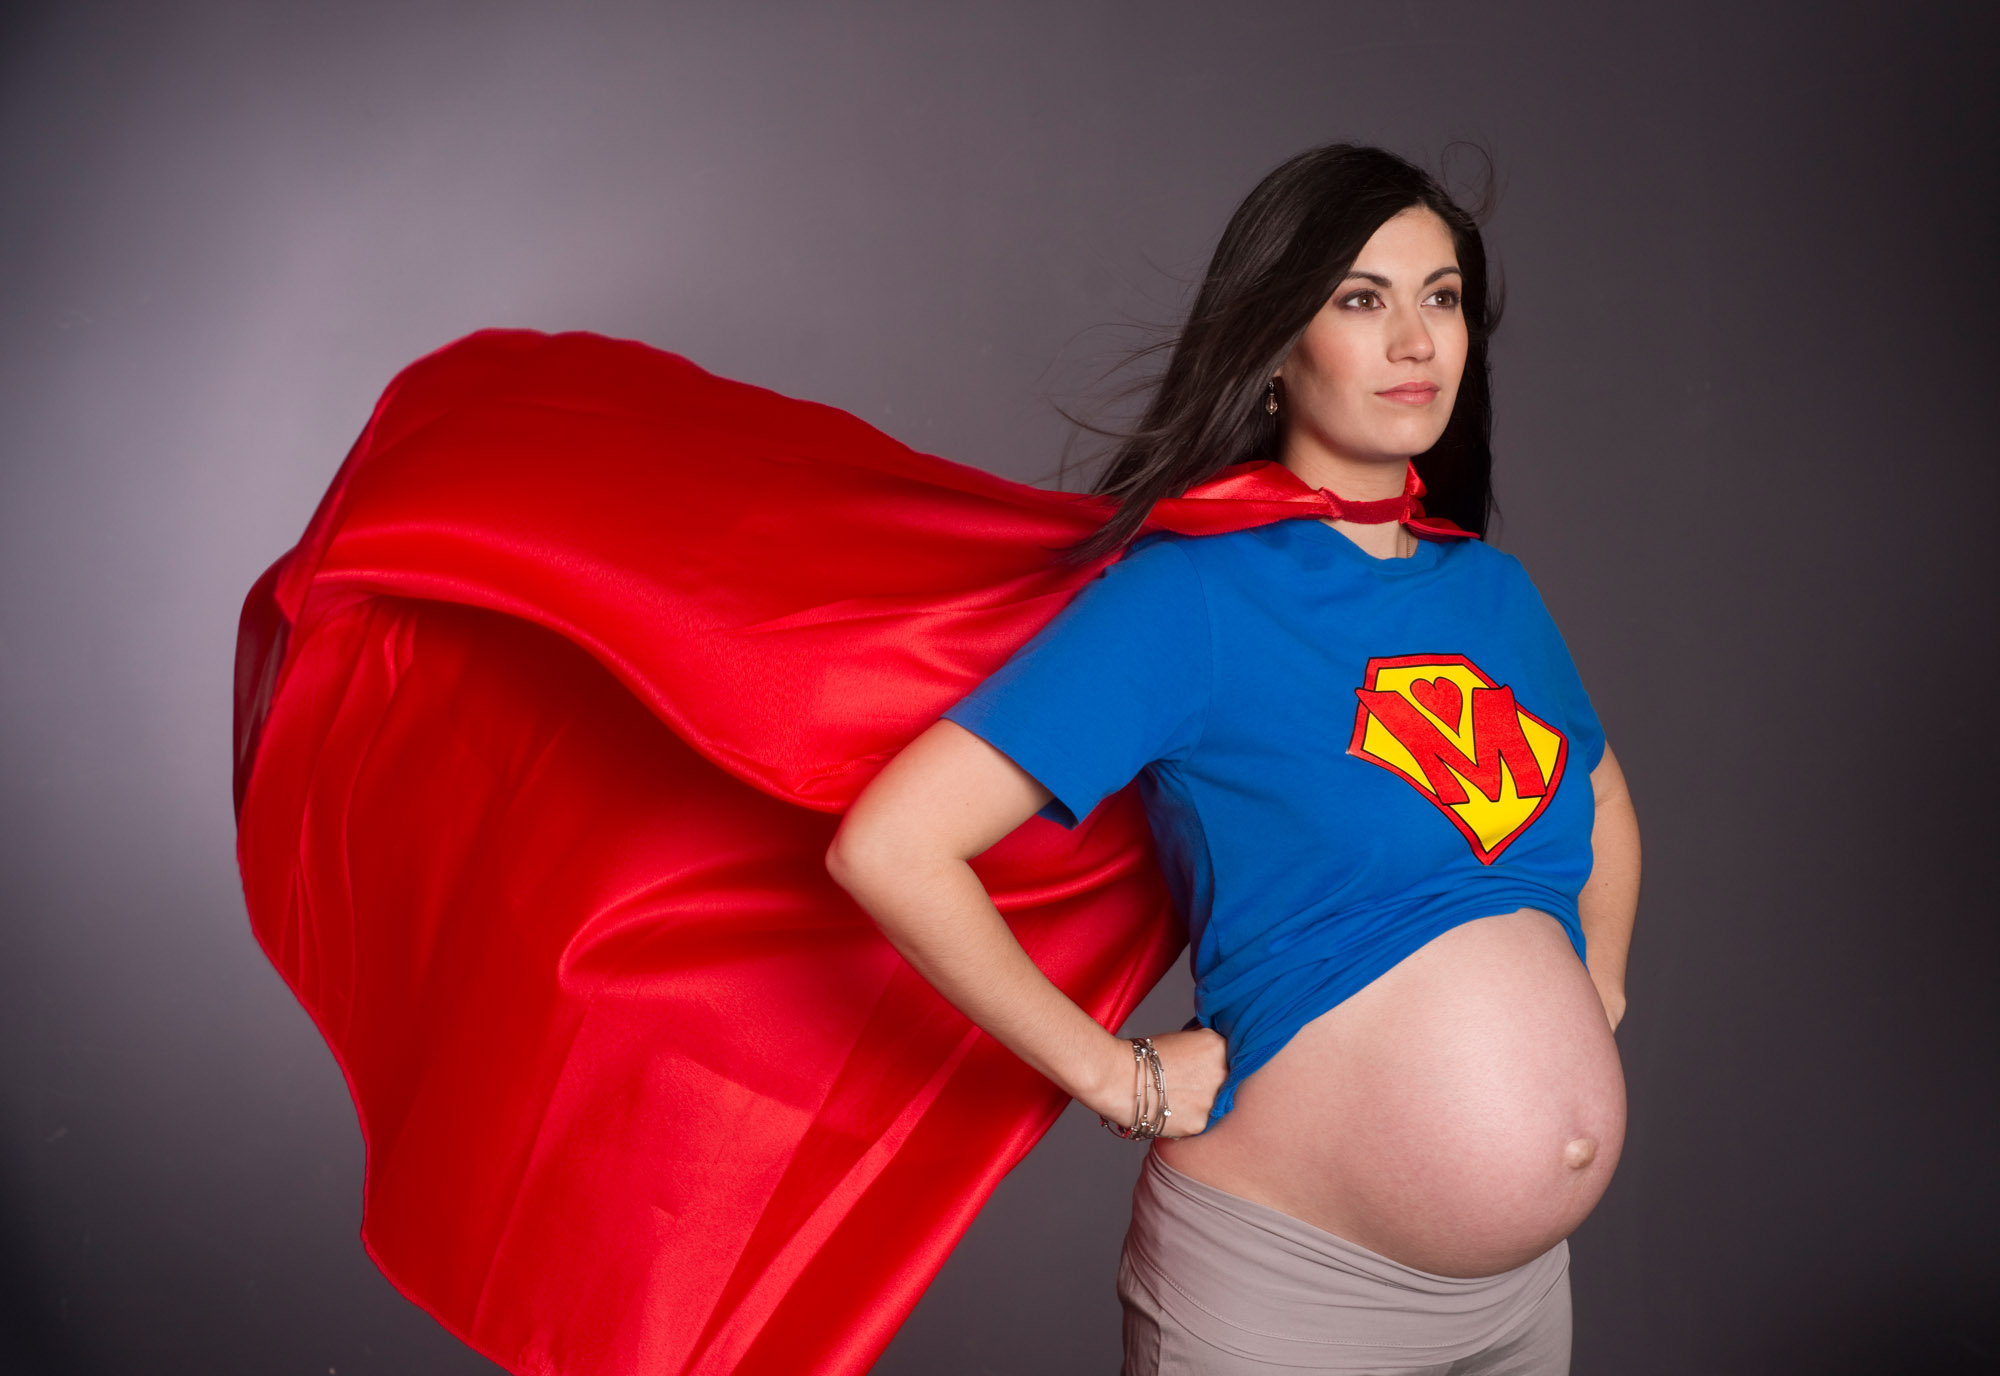 Superhero Birth Stories